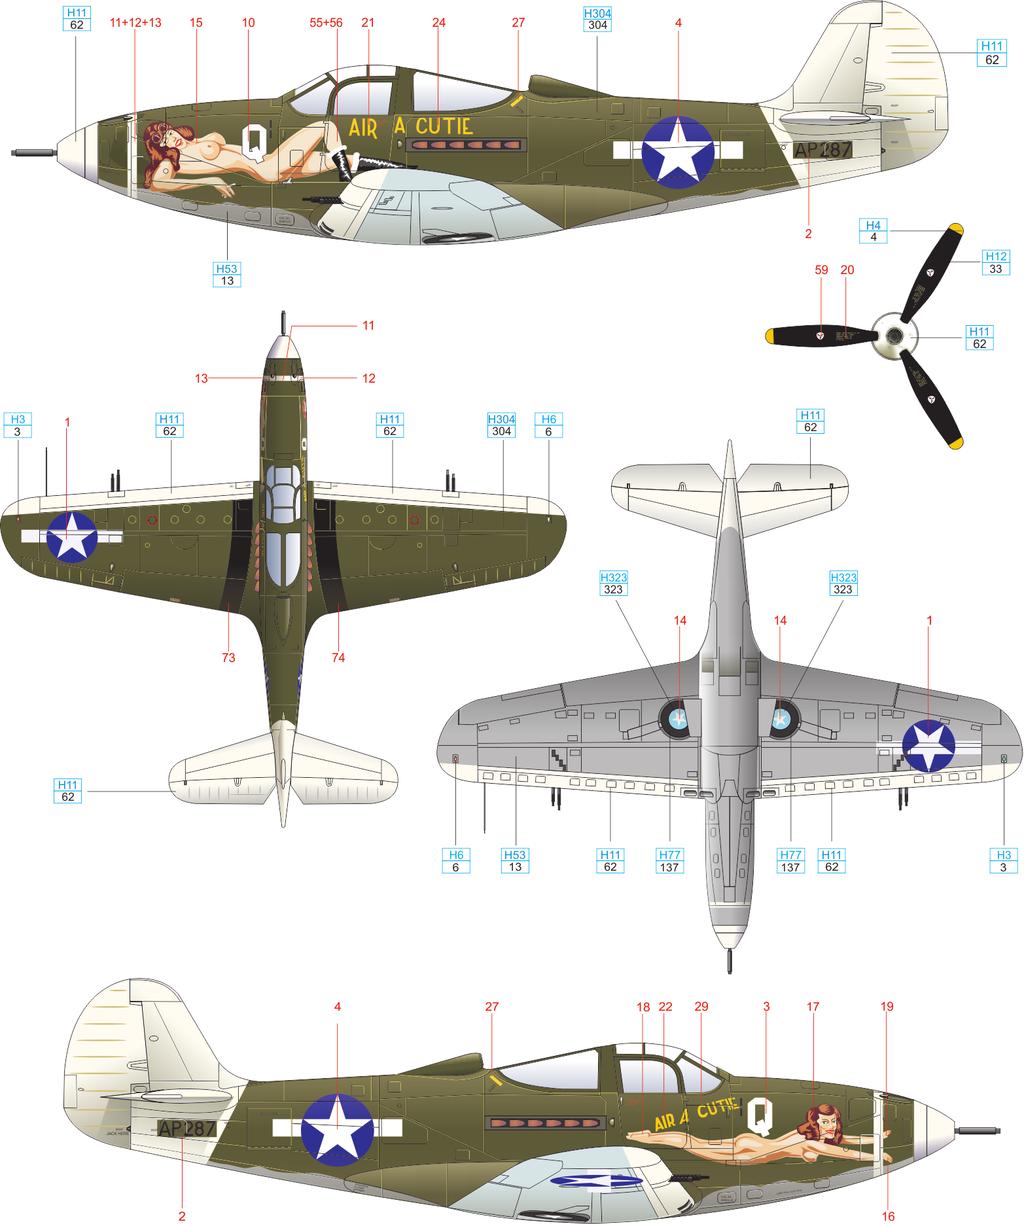 A P-400, 36th FS, 8th FG, New Guinea, November, 1943 YELLOW NEUTRAL GRAY H4 4 H53 13 BLACK OLIVE